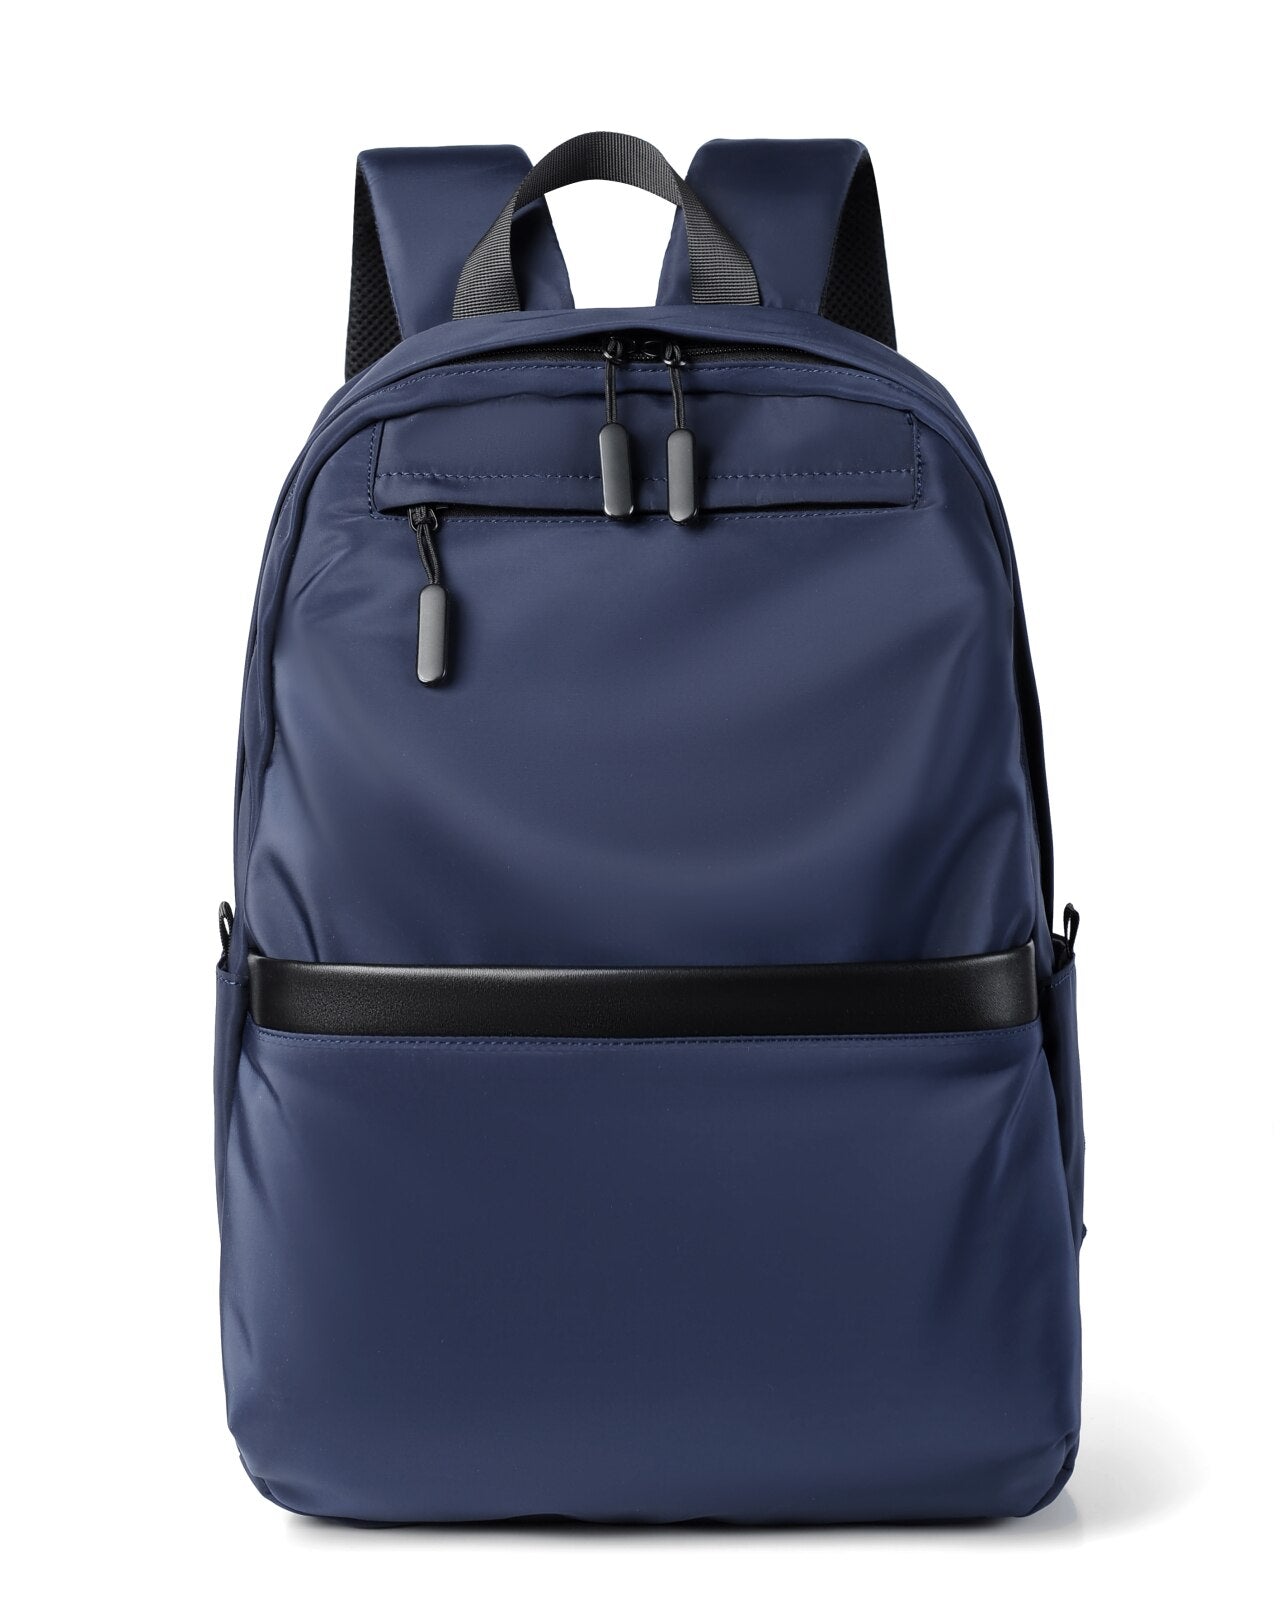 Classic Laptop Backpack for Women Men, Large Capacity College Backpacks School Bookbag Water Resistant Travel Work Bag,